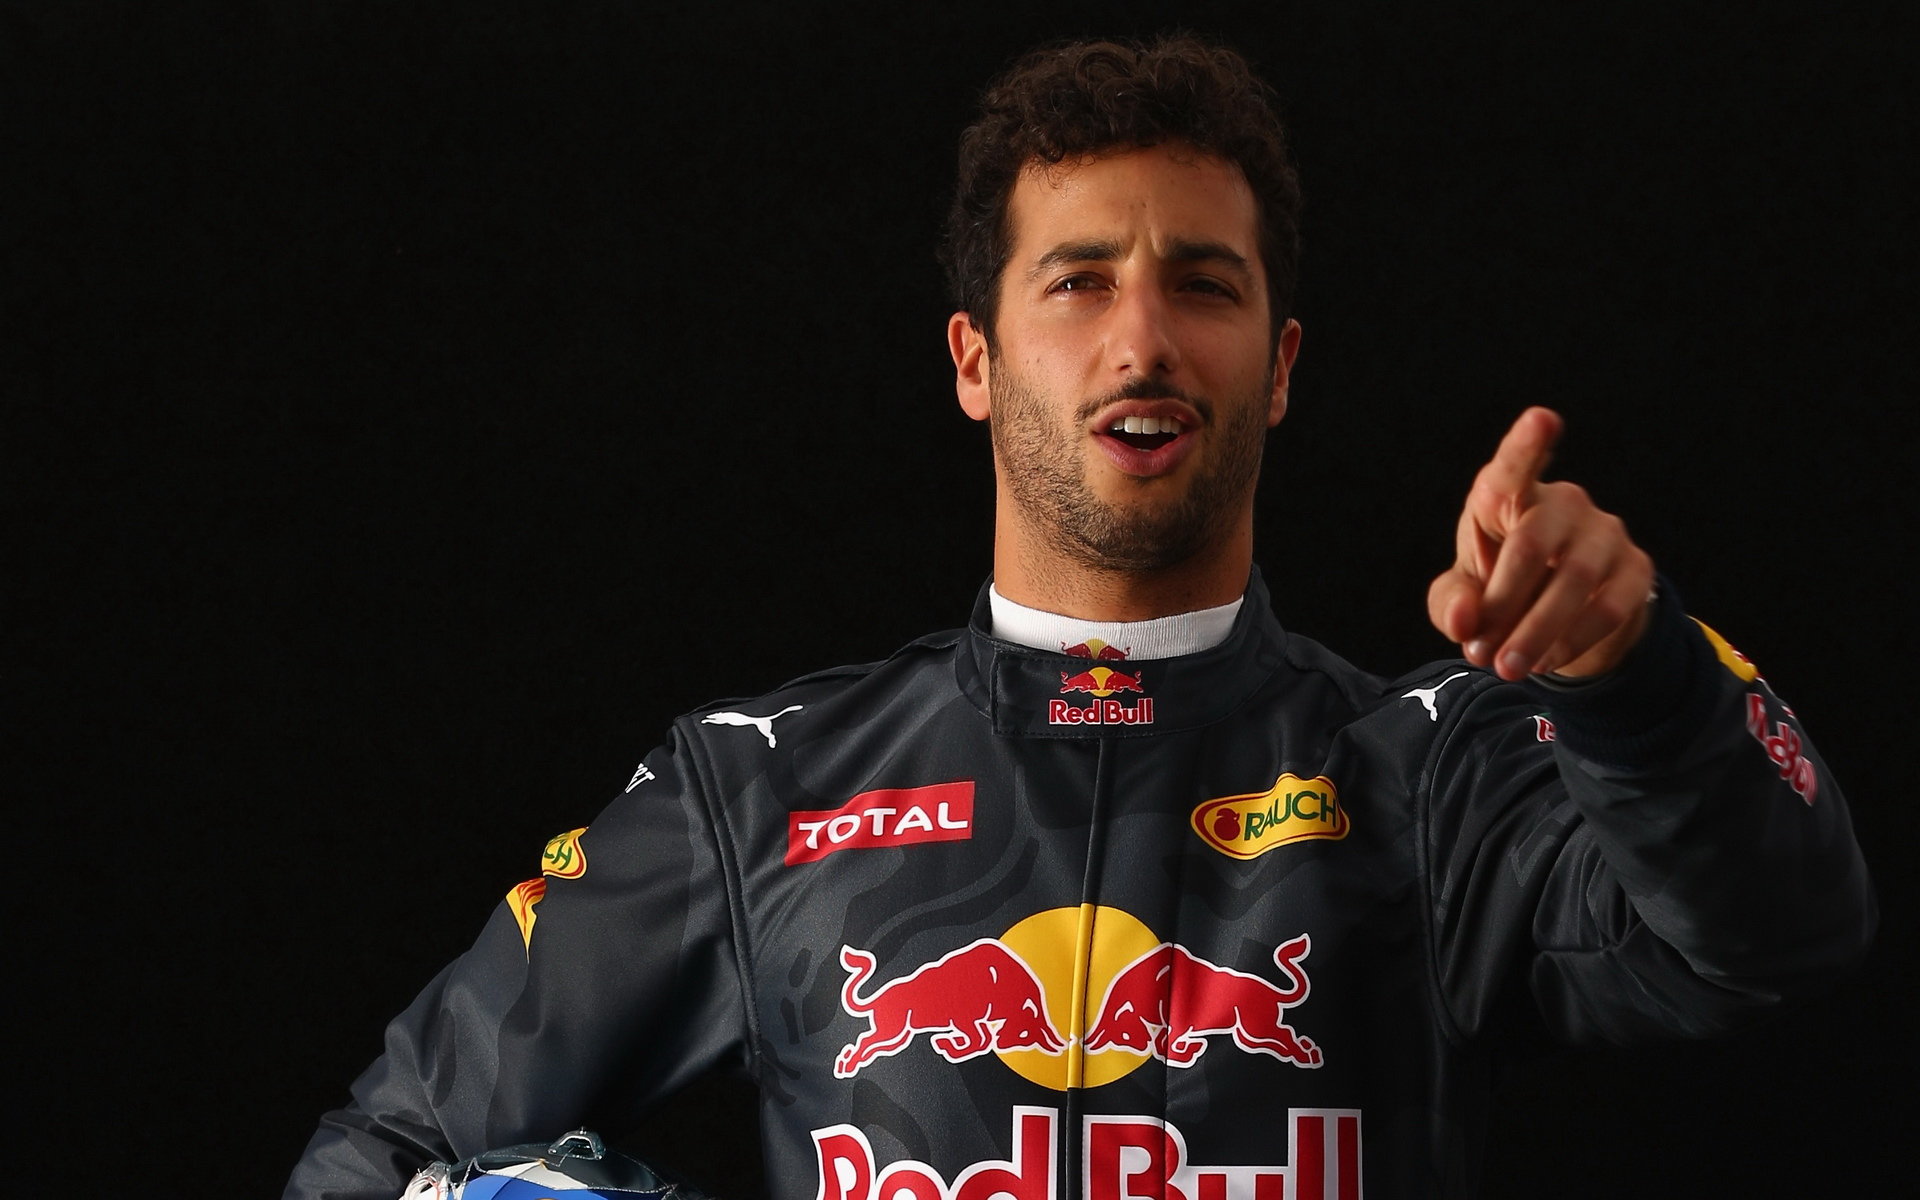 Daniel Ricciardo v Melbourne